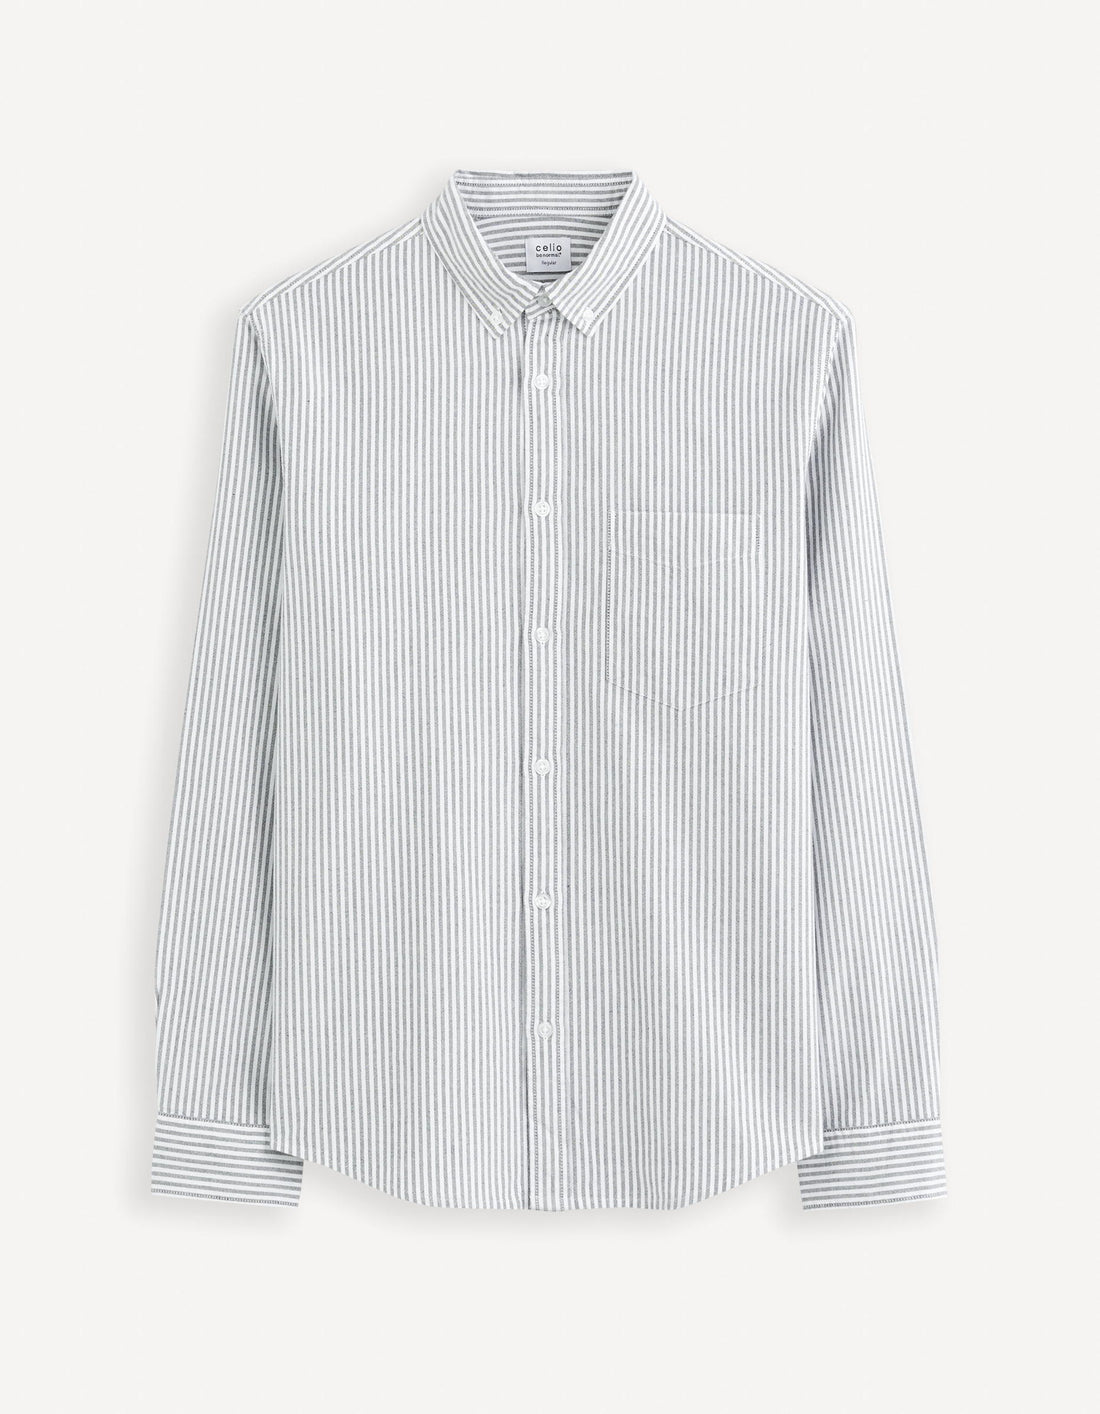 Regular 100% Cotton Oxford Shirt_CAOXFORDY_BLACK_02